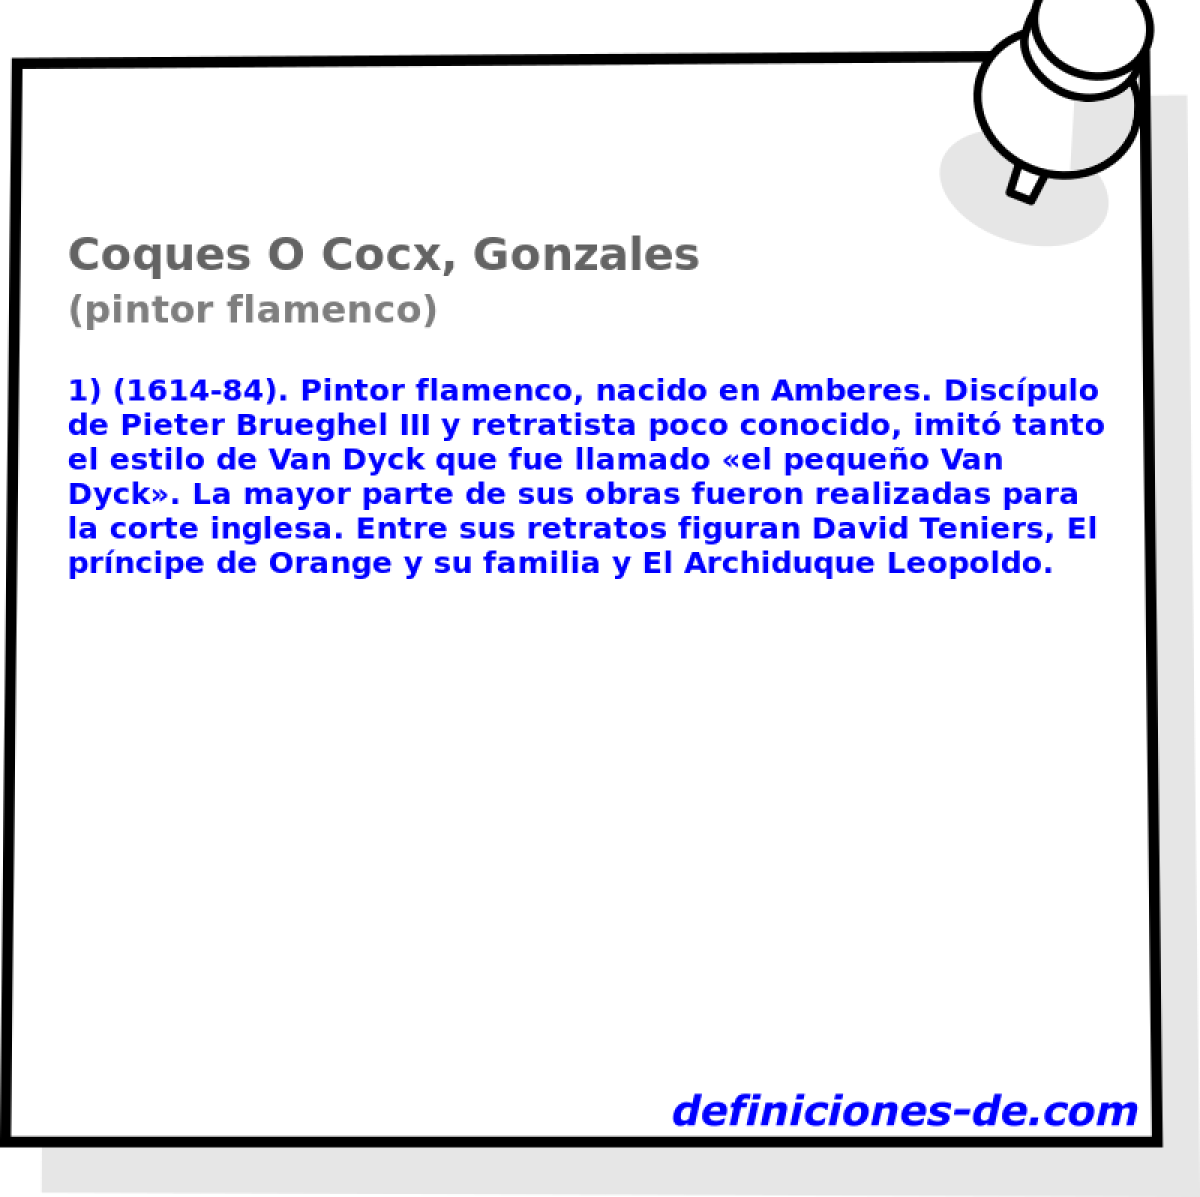 Coques O Cocx, Gonzales (pintor flamenco)